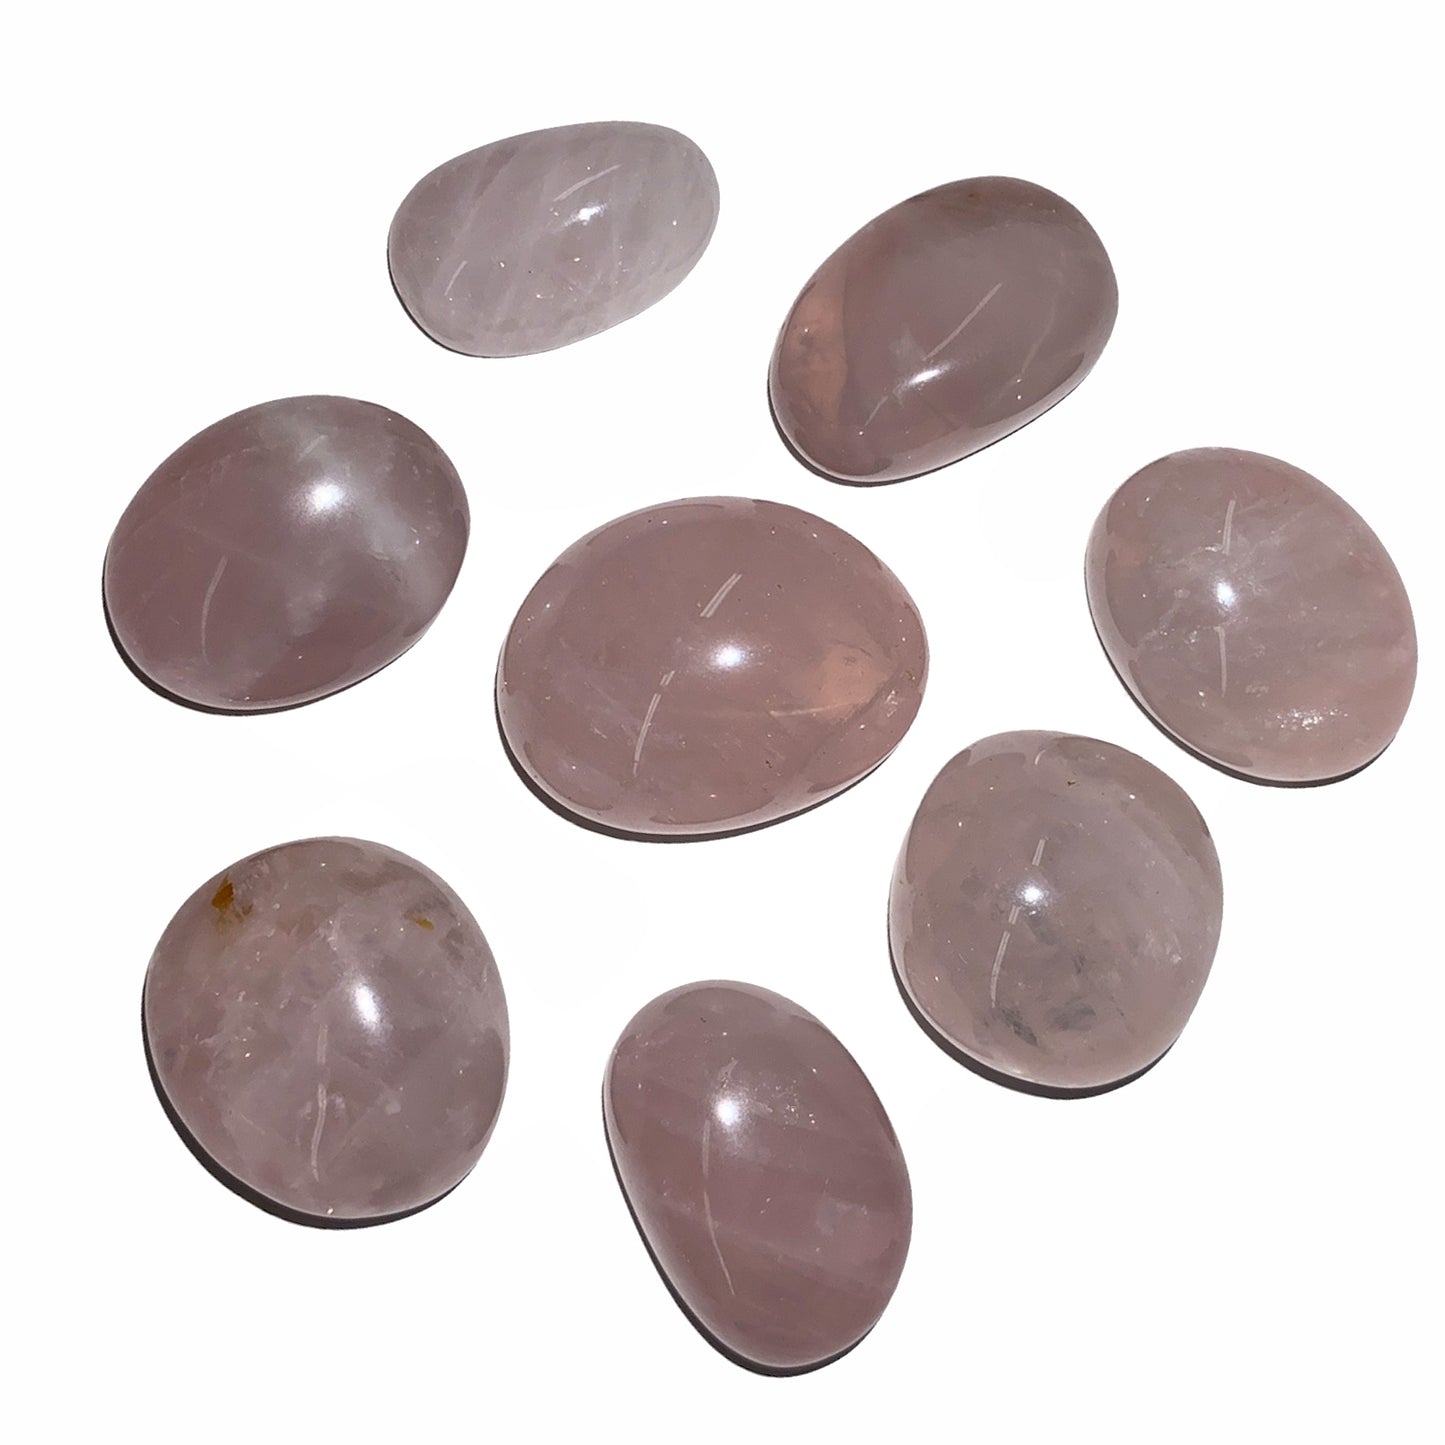 Grade A Rose Quartz Tumbled Stones - Large 30 - 45 mm - 500 grams - China - NEW1021 - 15 Stone average